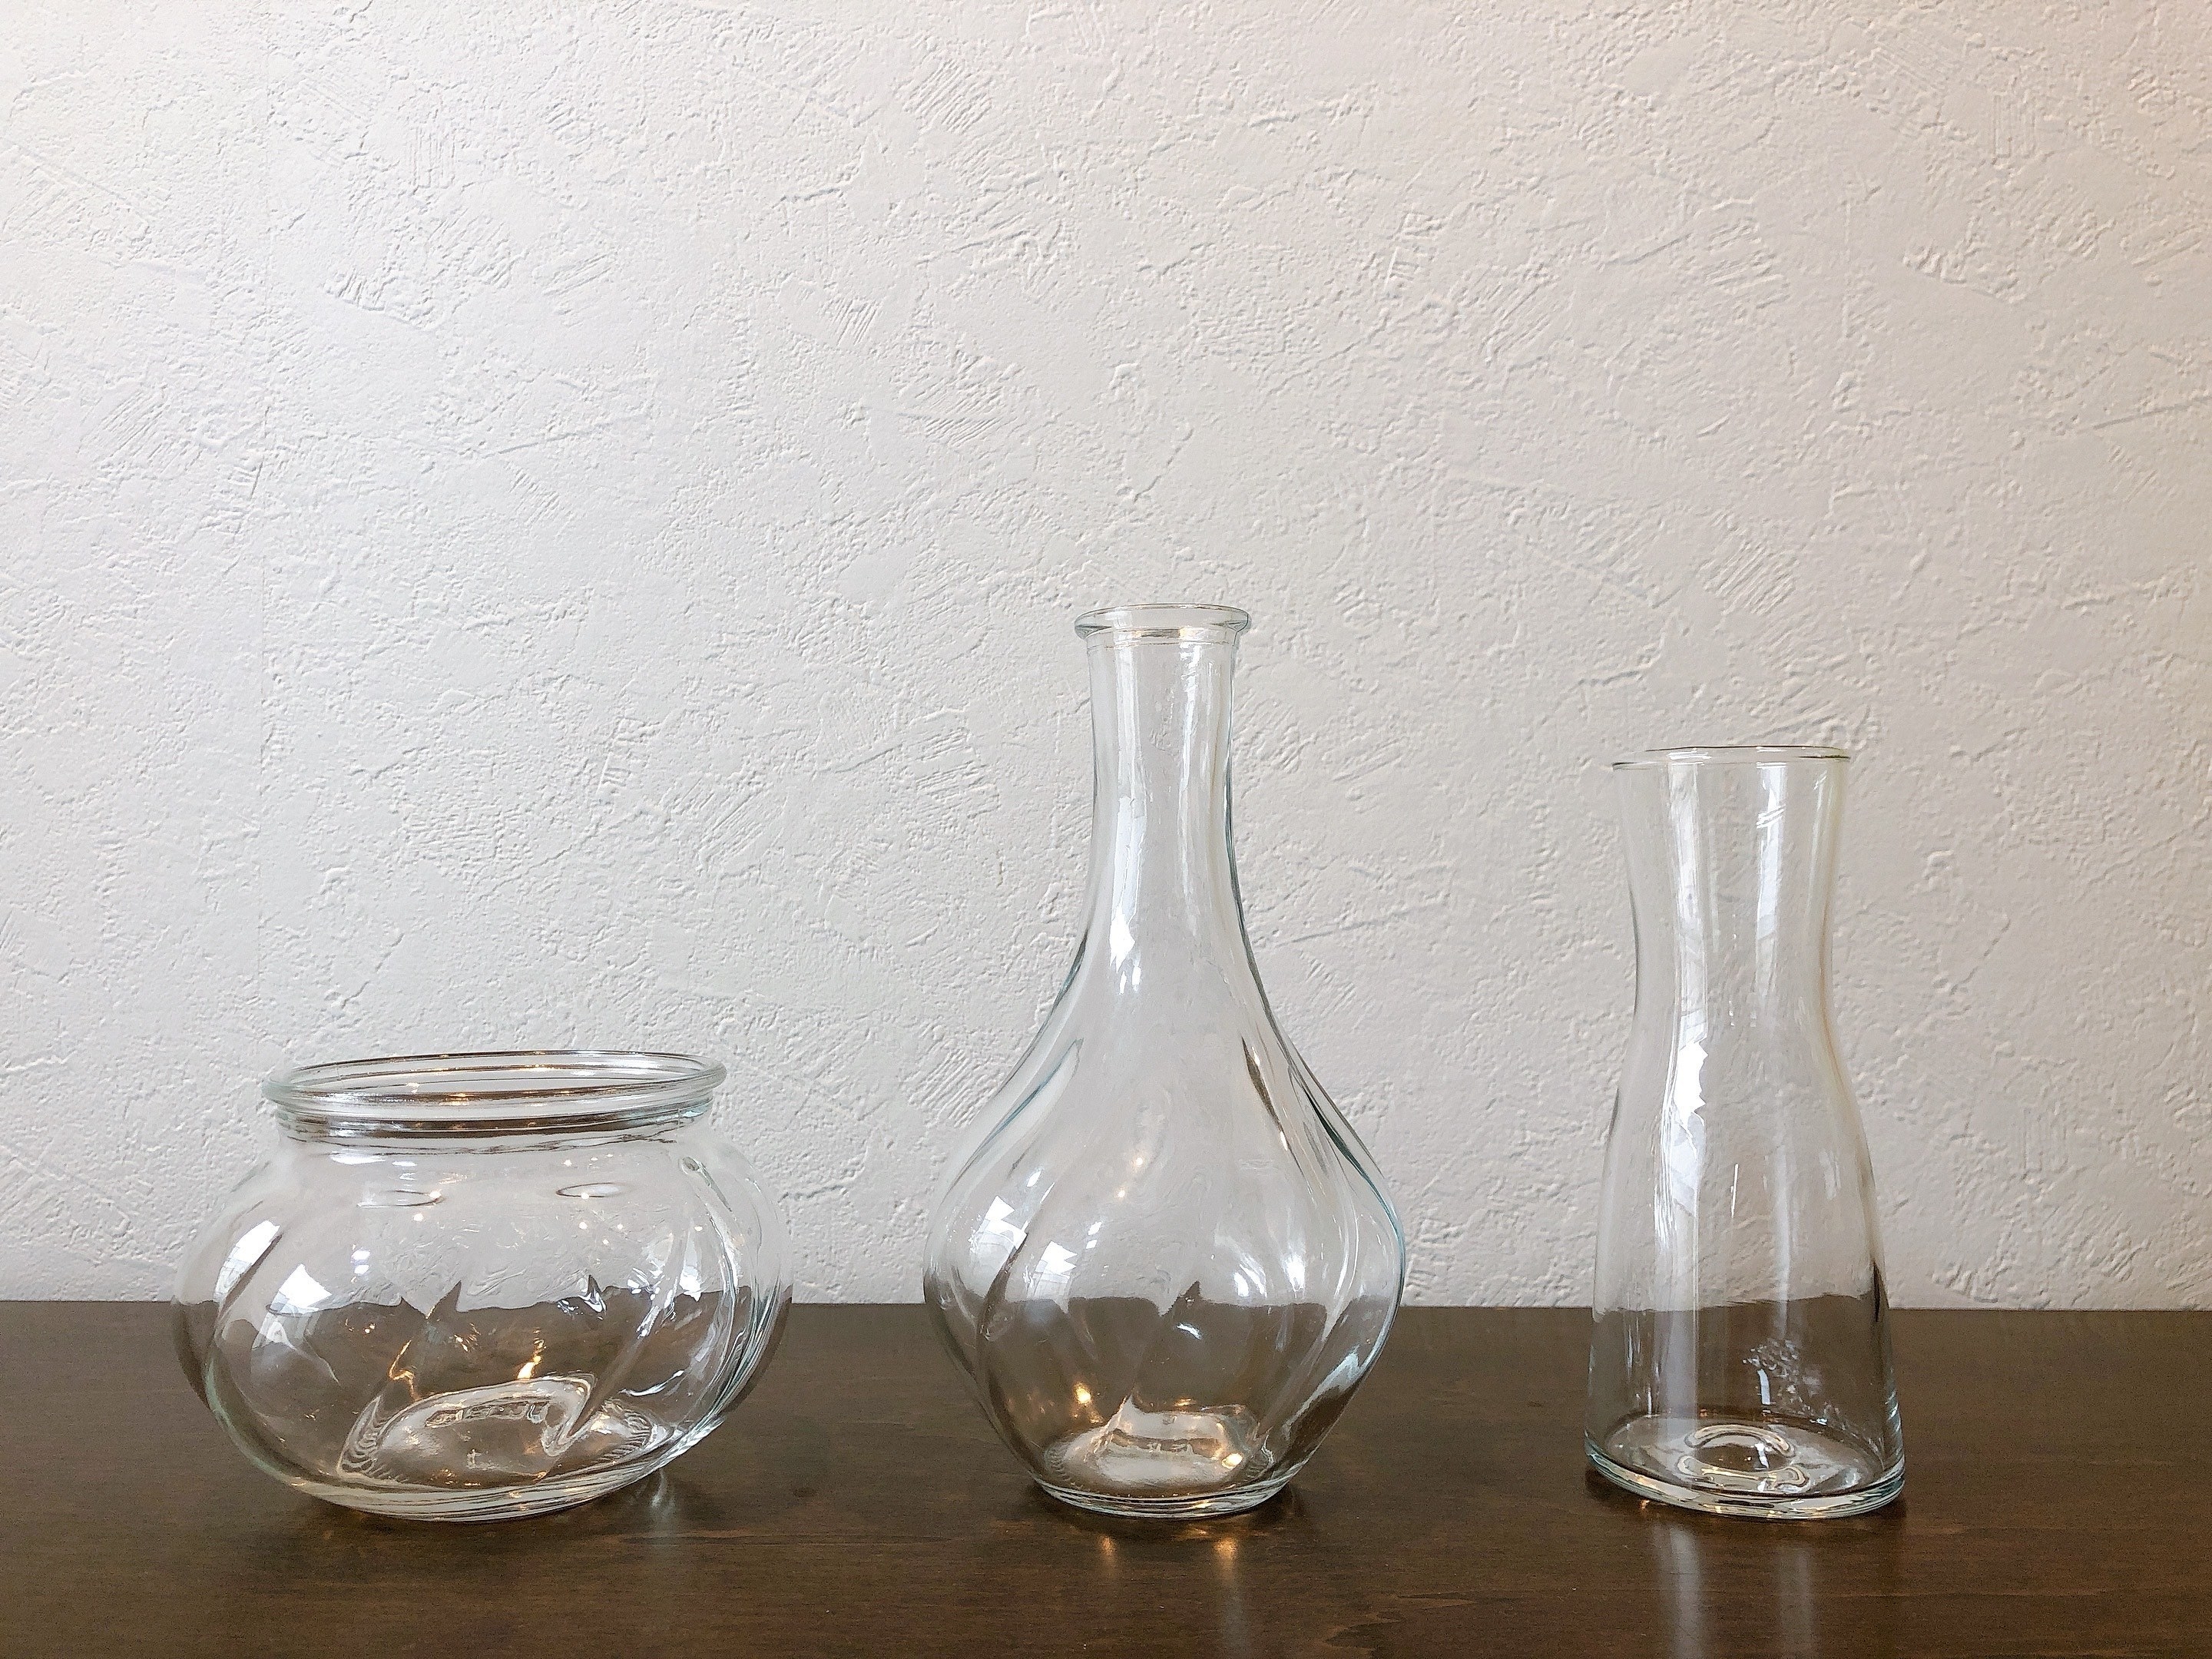 IKEA（イケア）のオススメの花瓶「VILJESTARK ヴィリエスタルク 花瓶,クリアガラス,8cm」、「VILJESTARK ヴィリエスタルク 花瓶,クリアガラス,17cm」、「TIDVATTEN ティドヴァッテン 花瓶,クリアガラス,14cm」